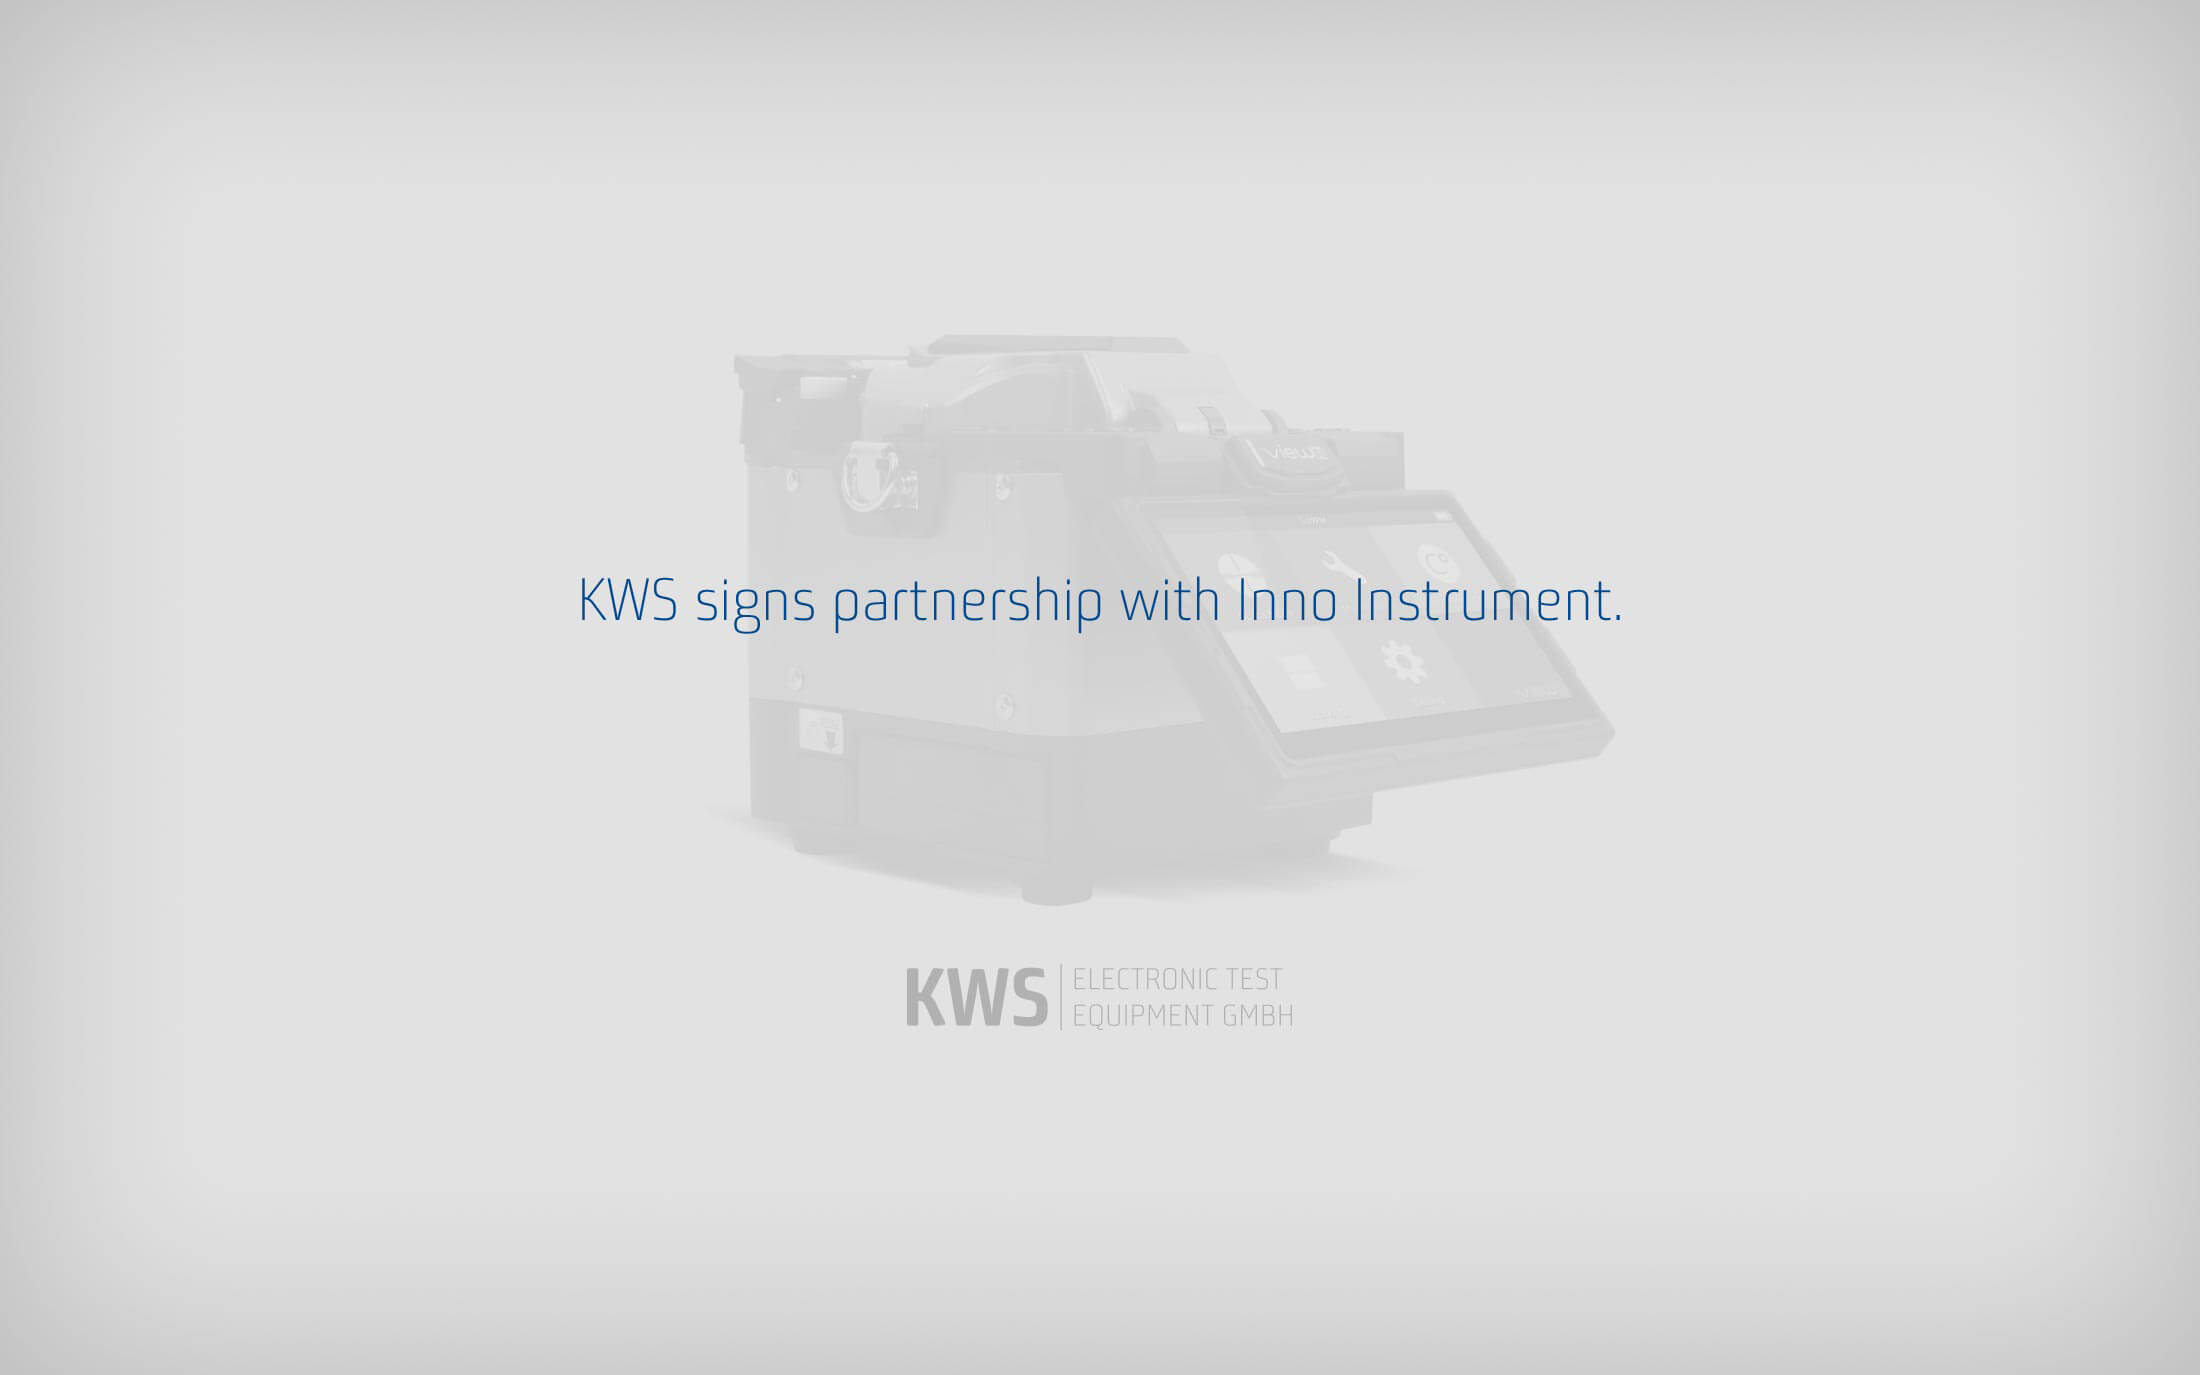 KWS-Electronic News 2019: Partnership with INNO Instrument